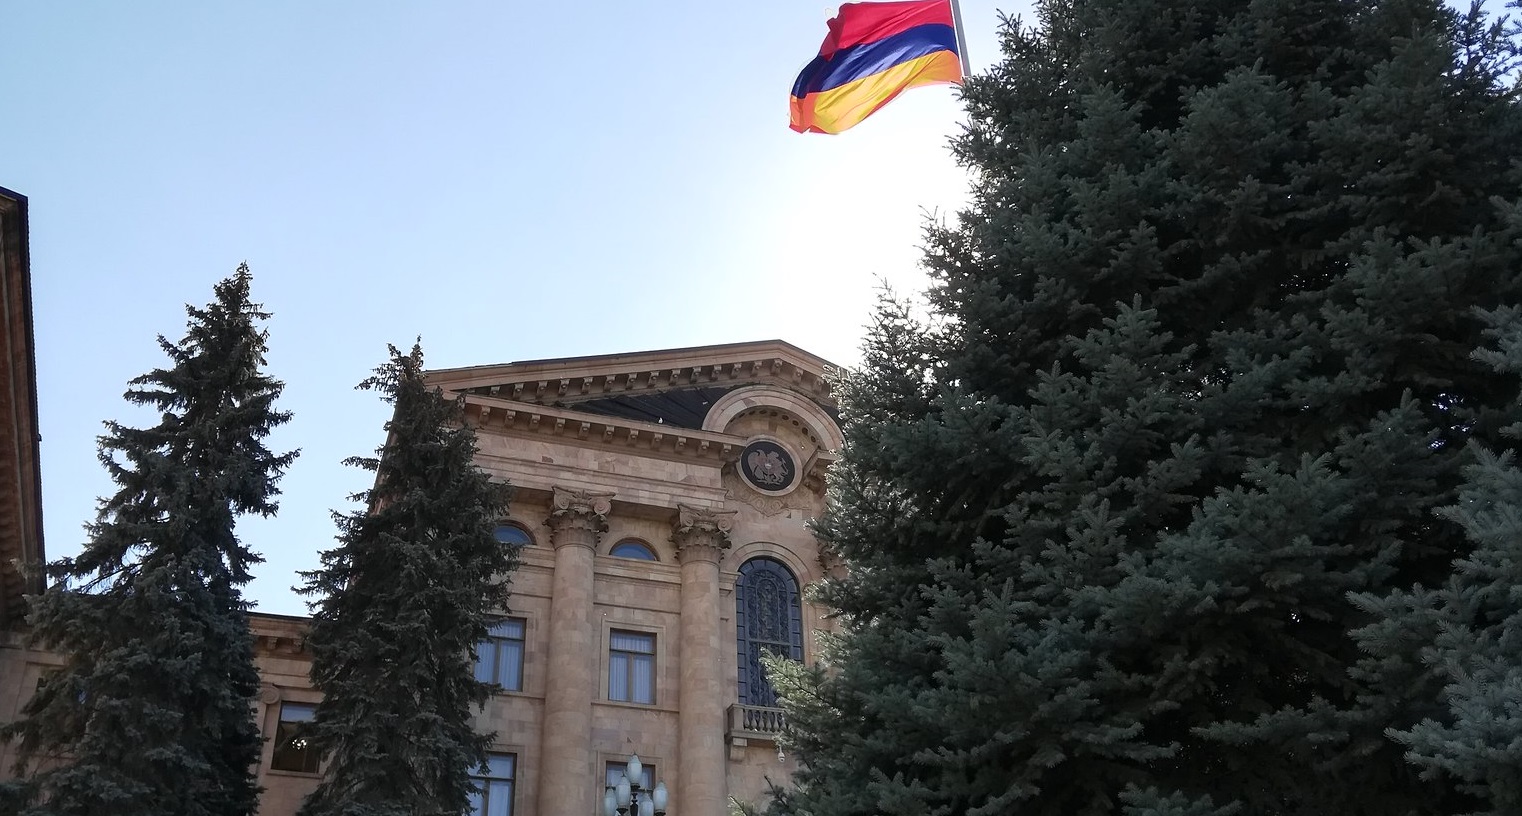 Parliament of Armenia. Image credit: Hovo Hanragitakan@Flickr